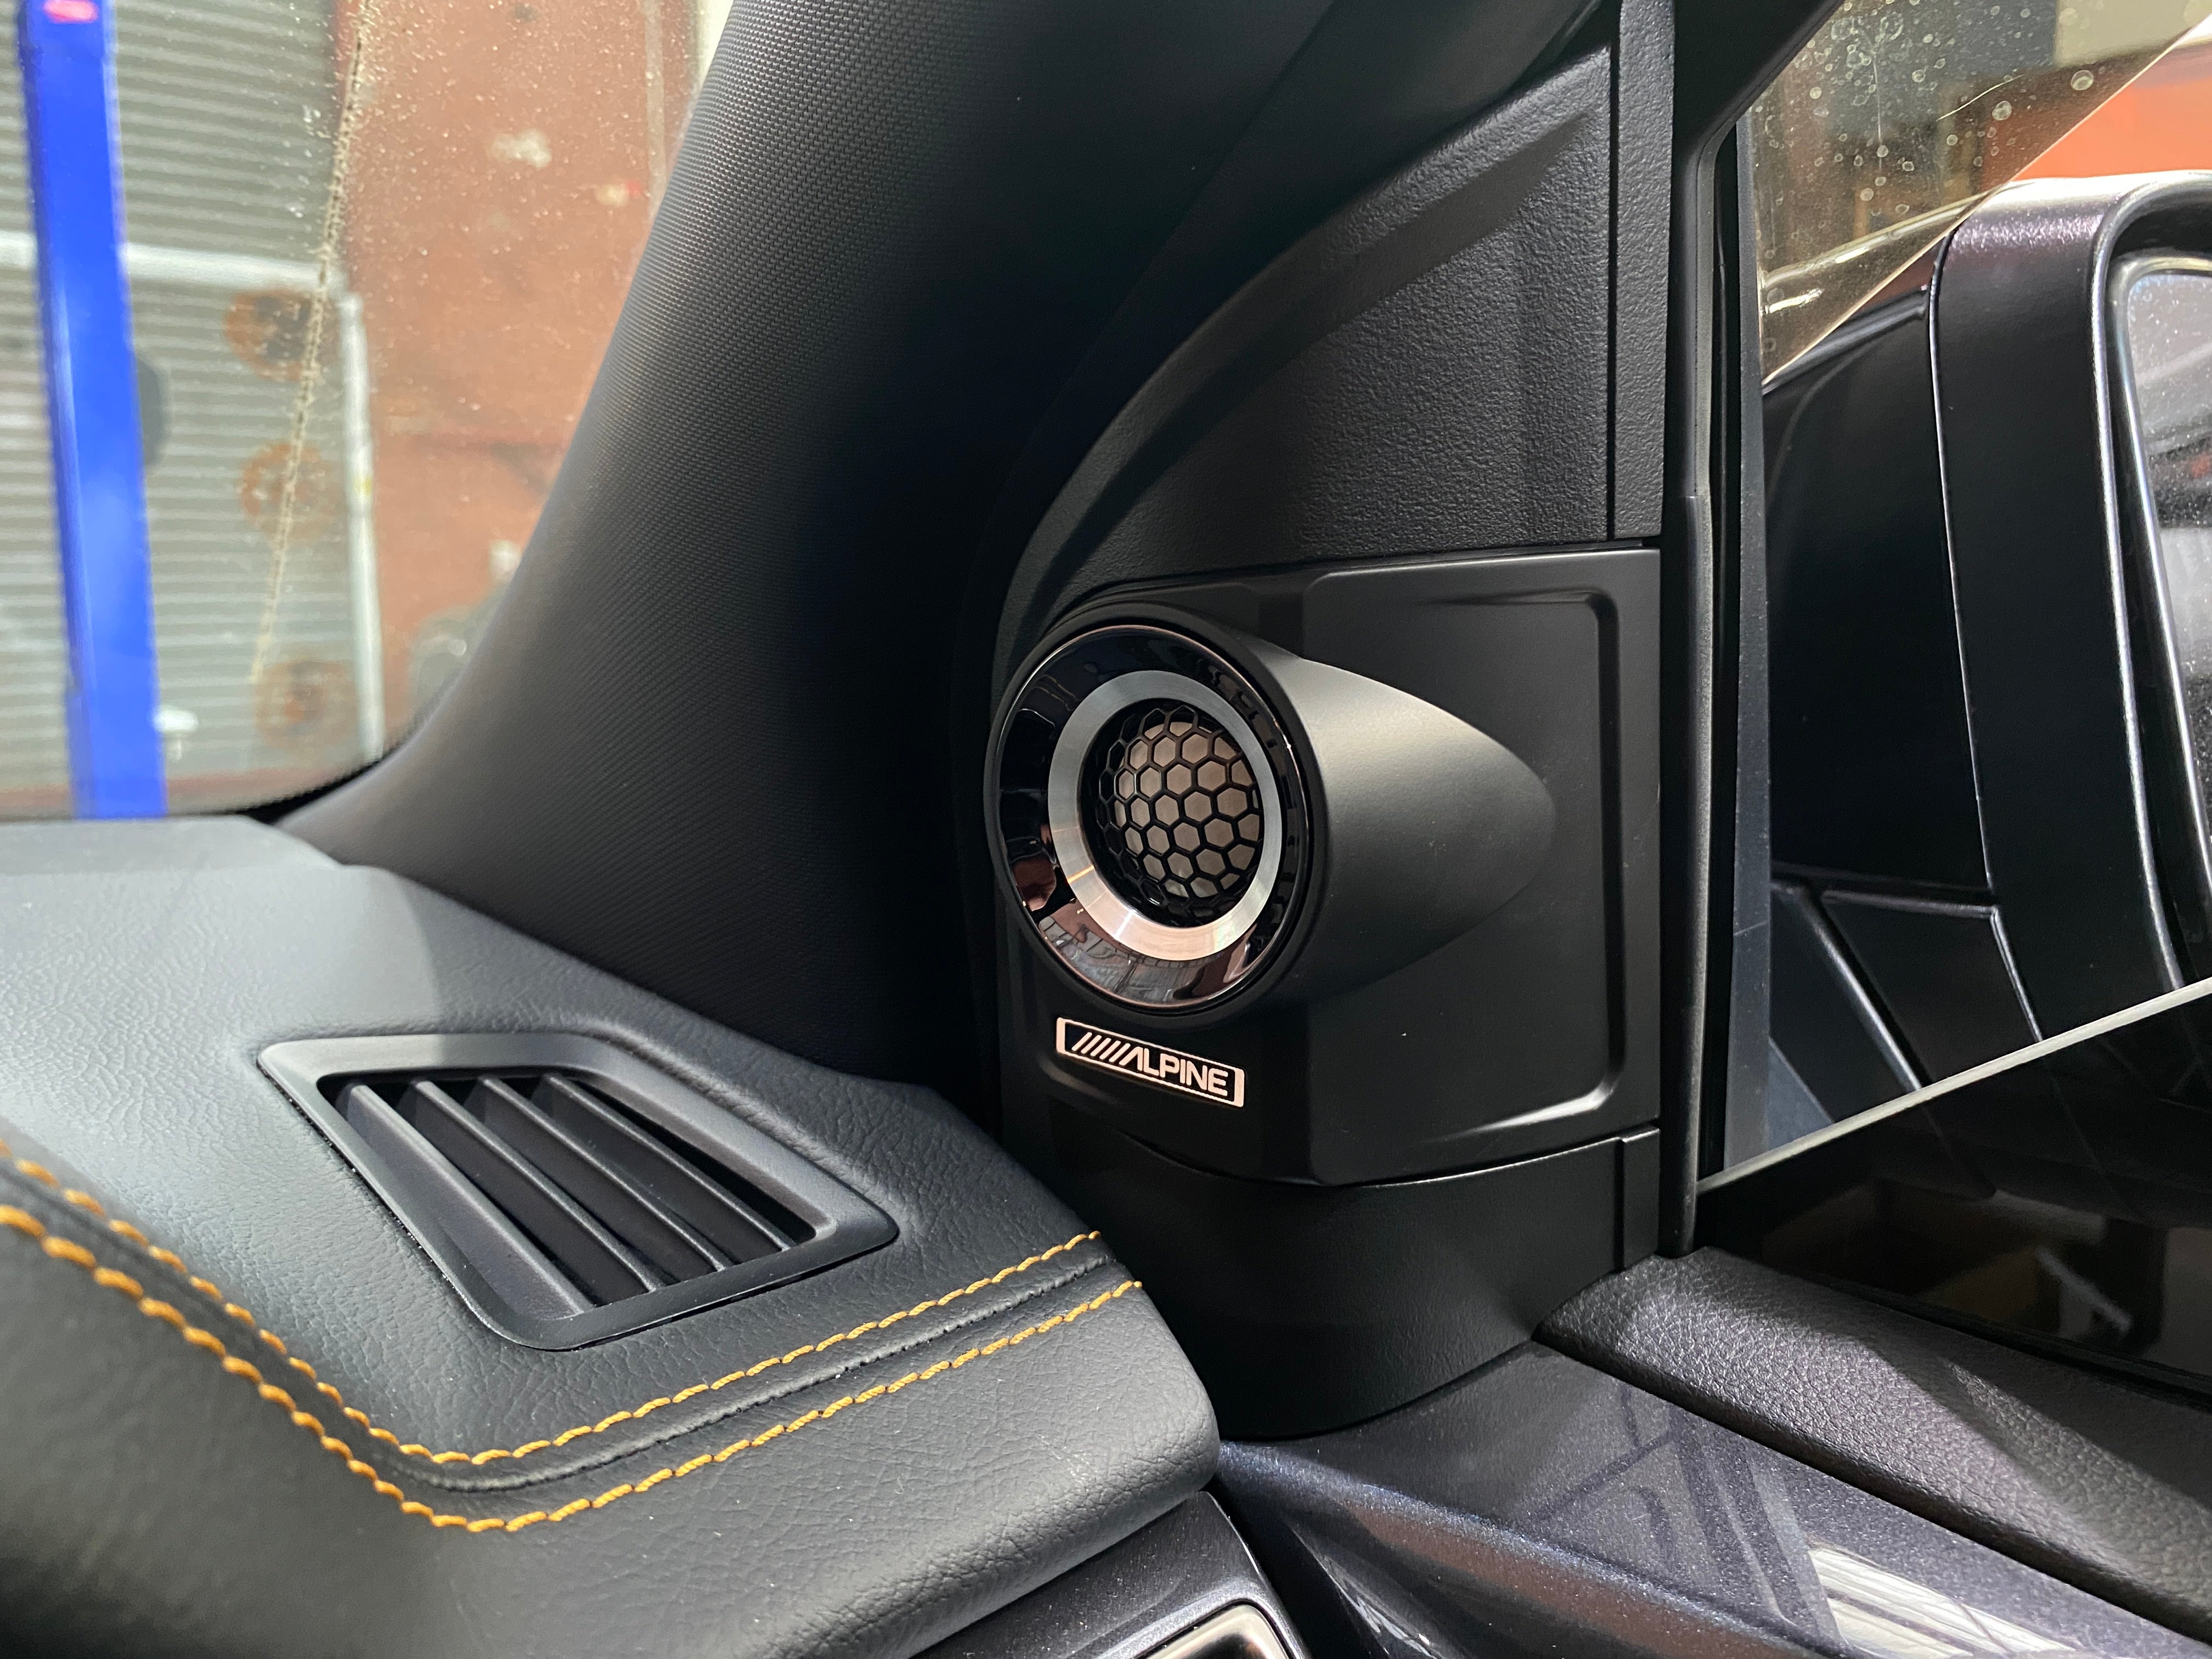 Ford Ranger Alpine Premium Sound - R2 Series Speakers